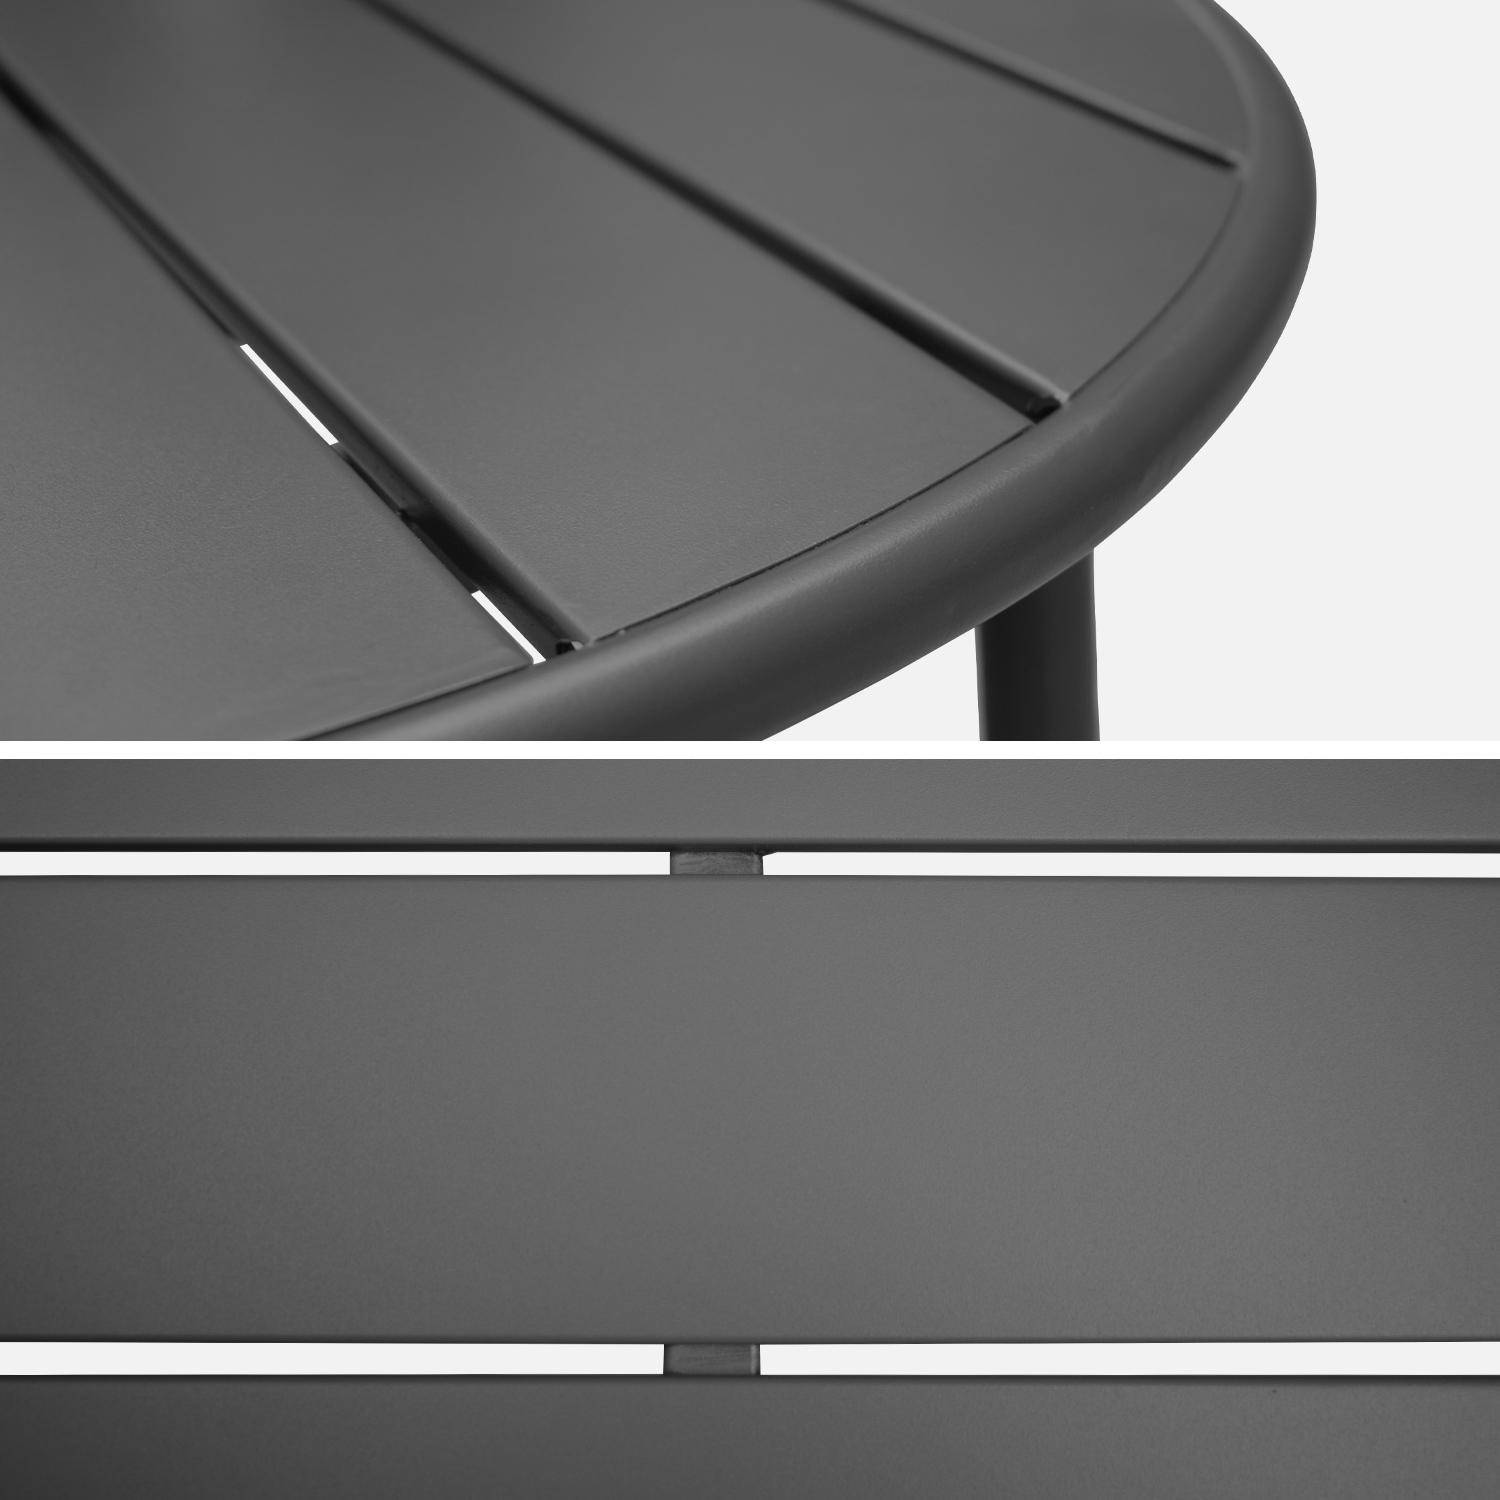 2-seater round steel garden table, Ø75cm - Amelia - Anthracite,sweeek,Photo6